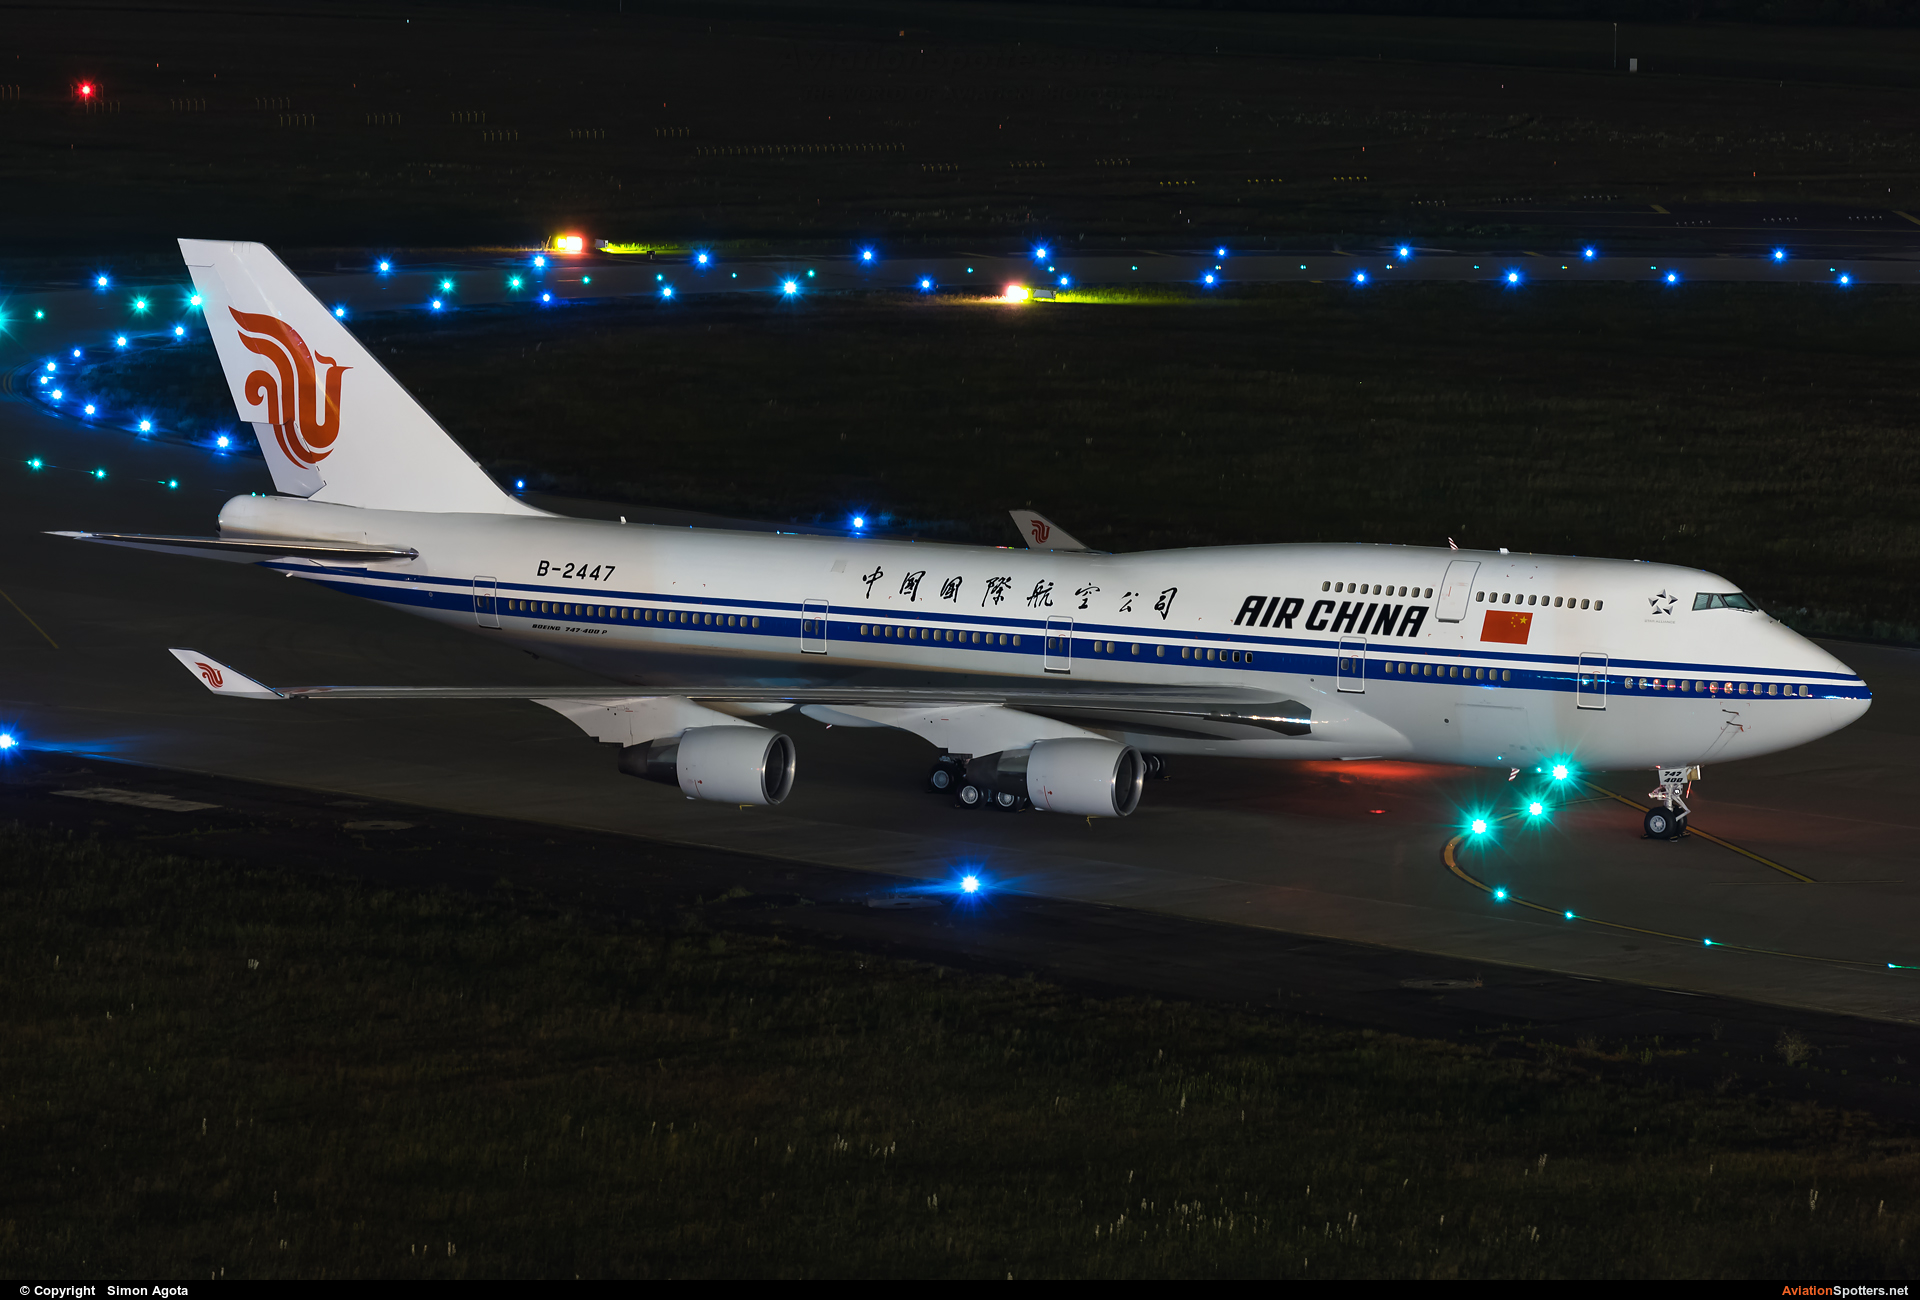 Air China  -  747-400  (B-2447) By Simon Agota (goti80)